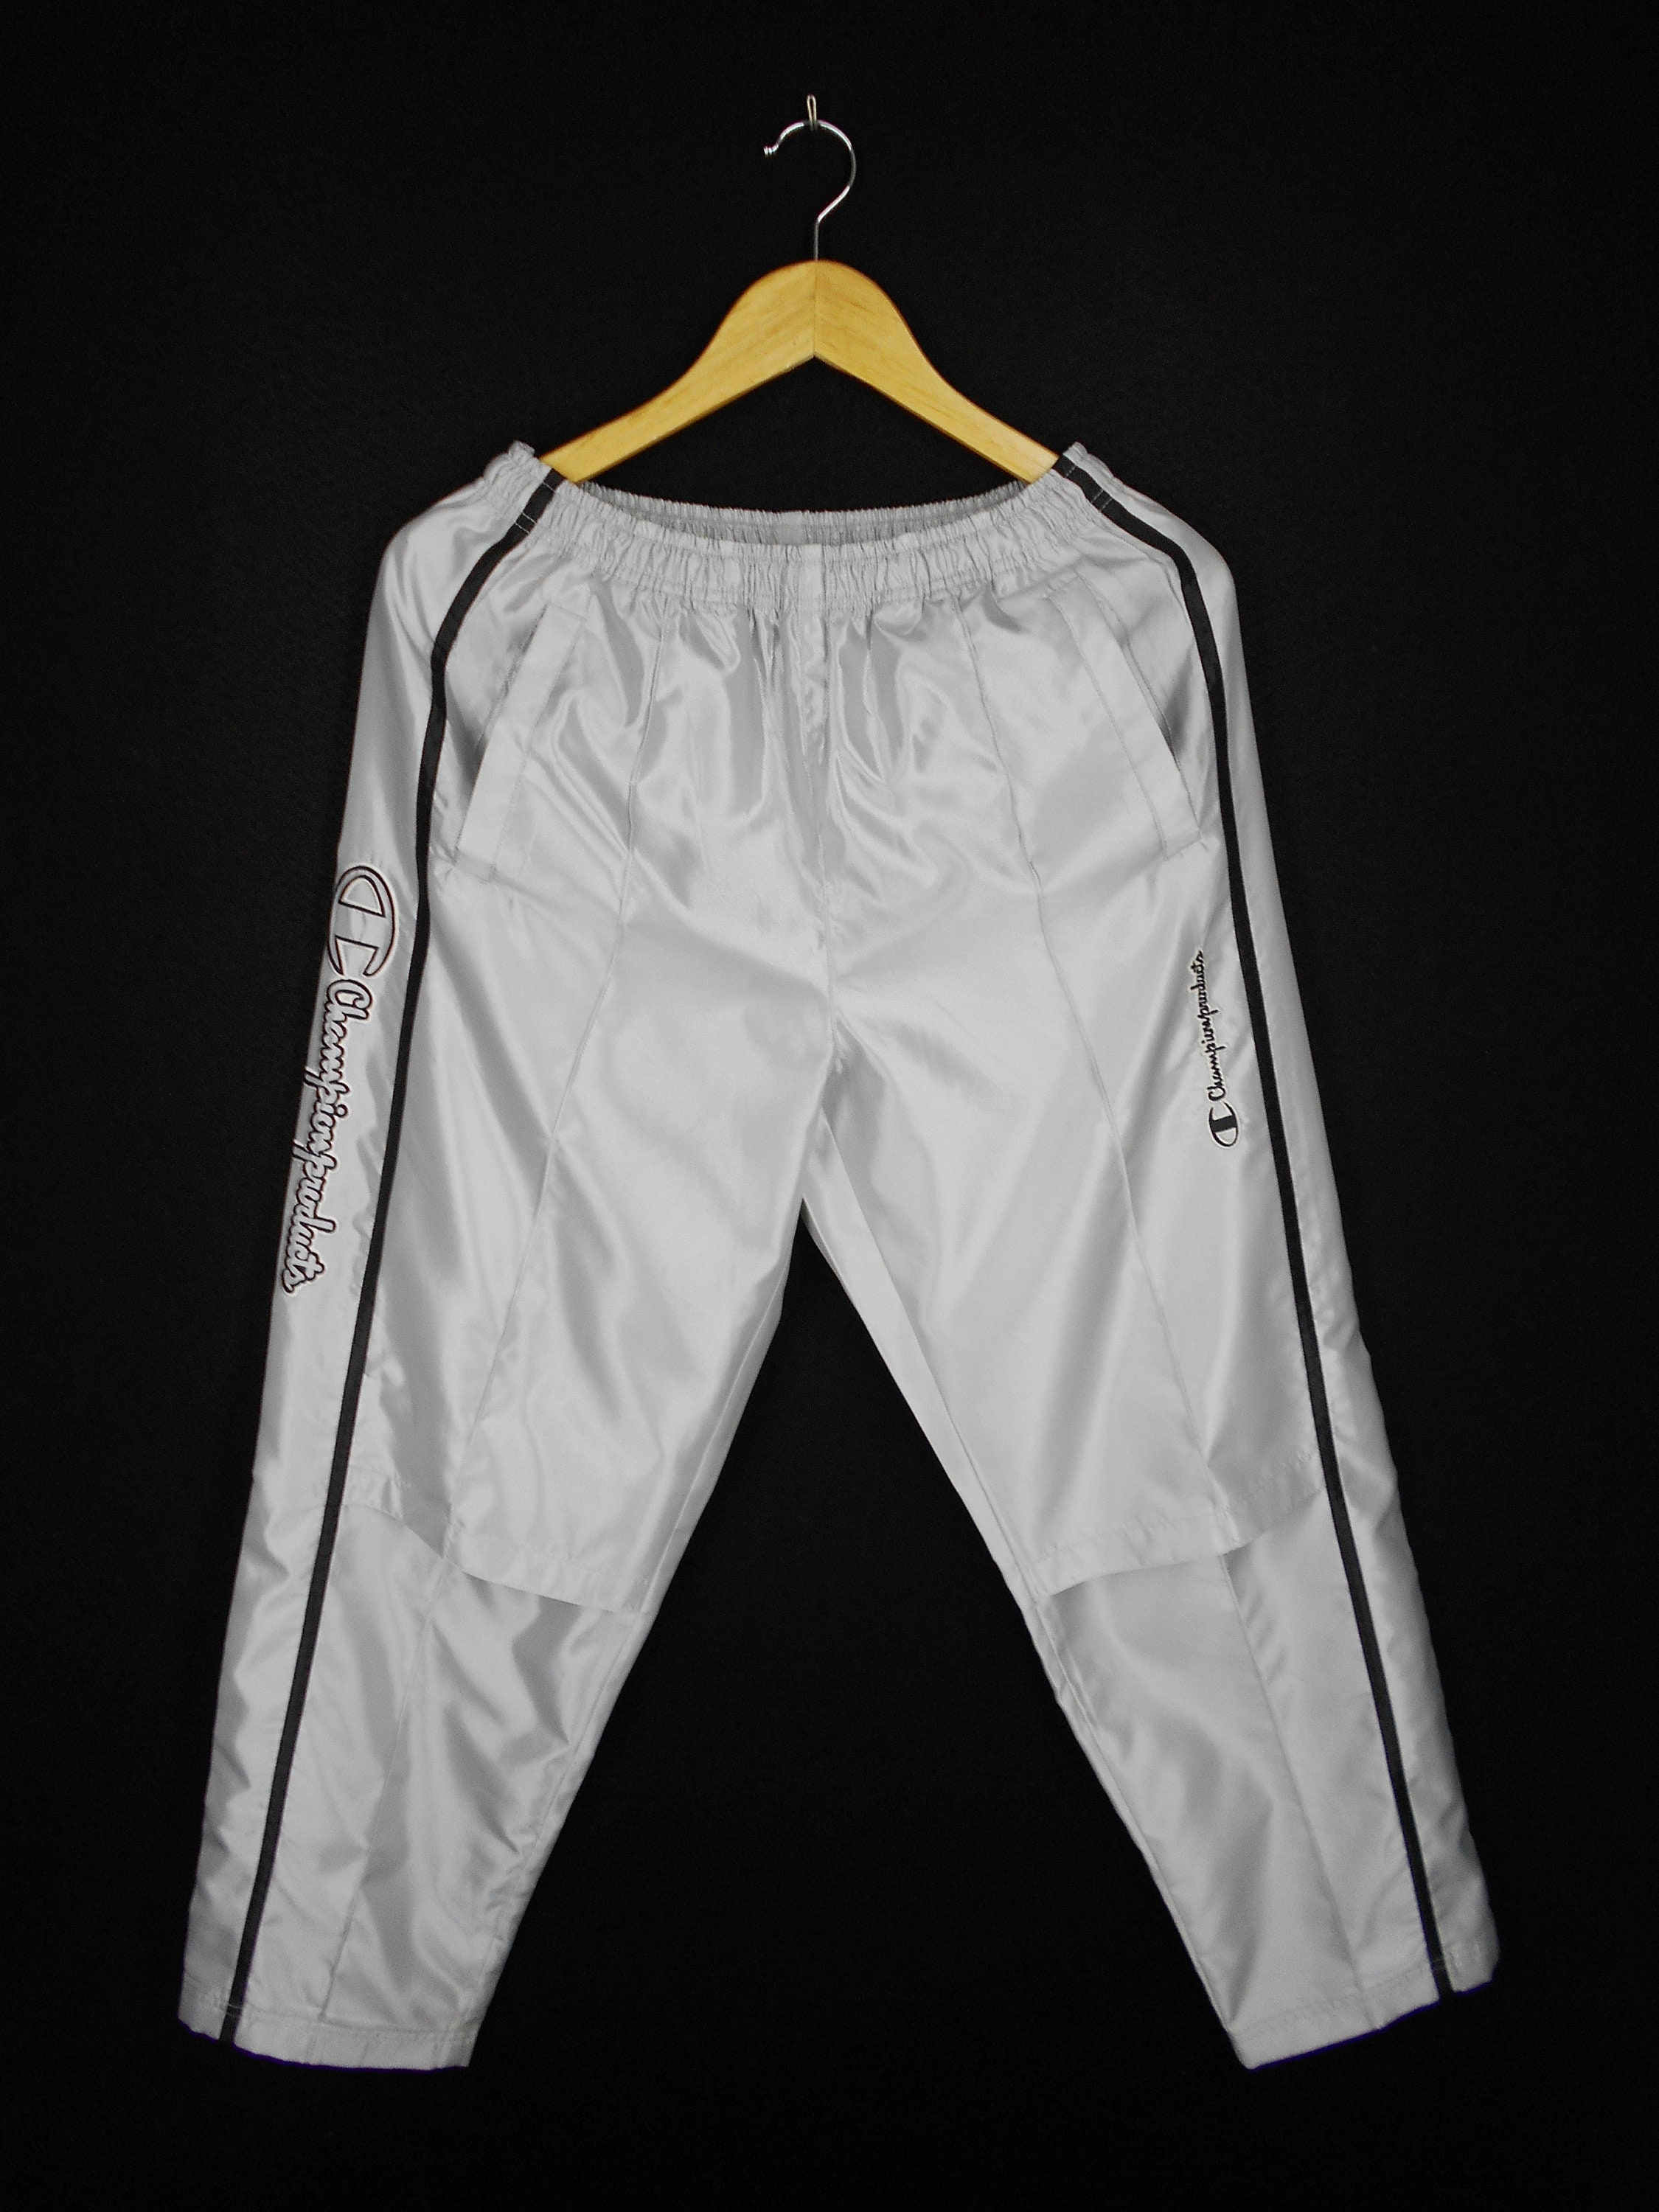 Champion Tracksuit Champion Pants Vintage Champion Trousers | Etsy